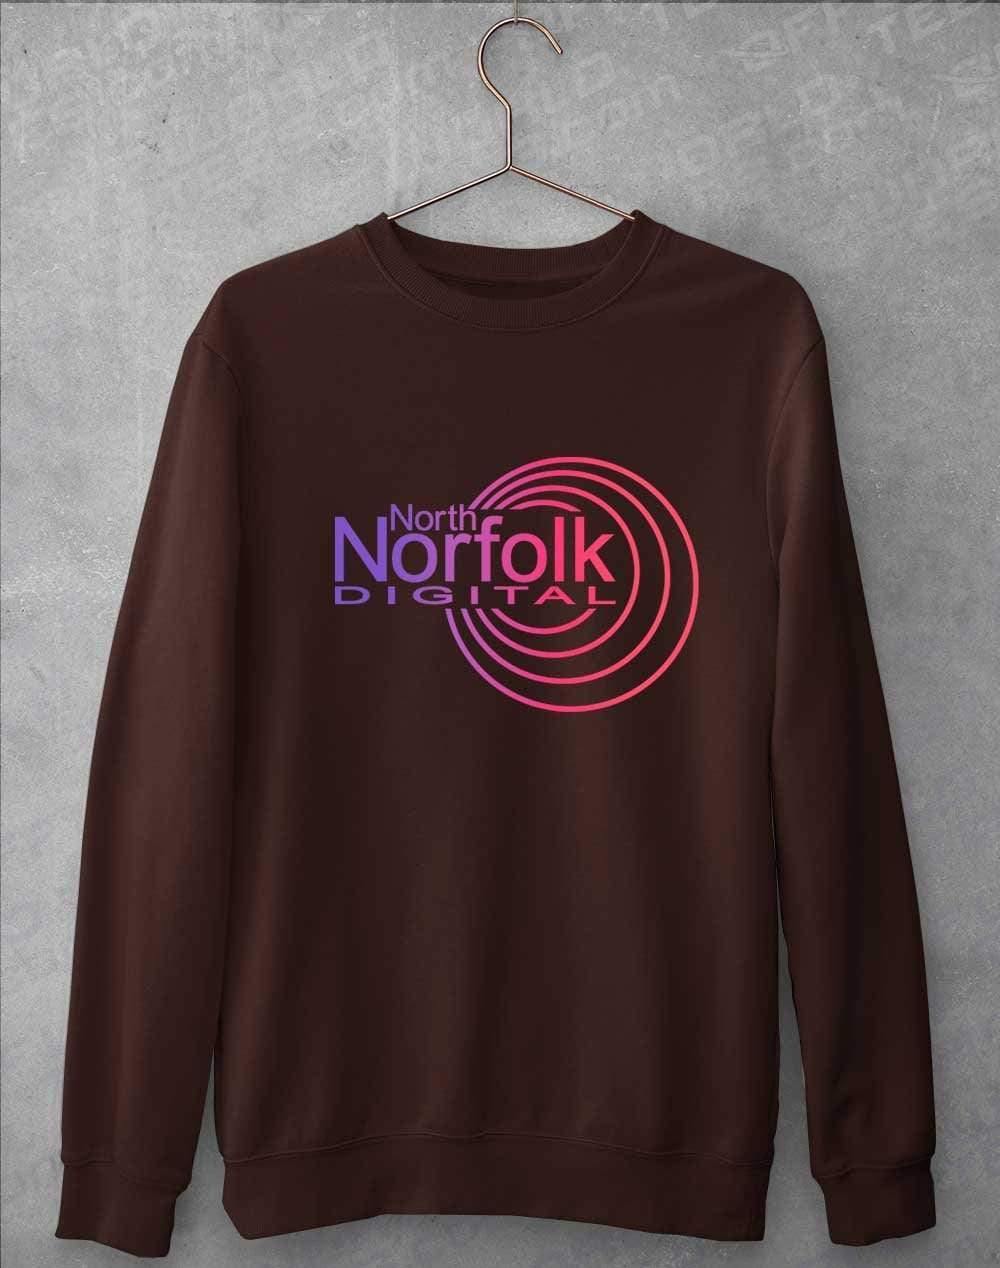 North Norfolk Digital Sweatshirt S / Hot Chocolate  - Off World Tees